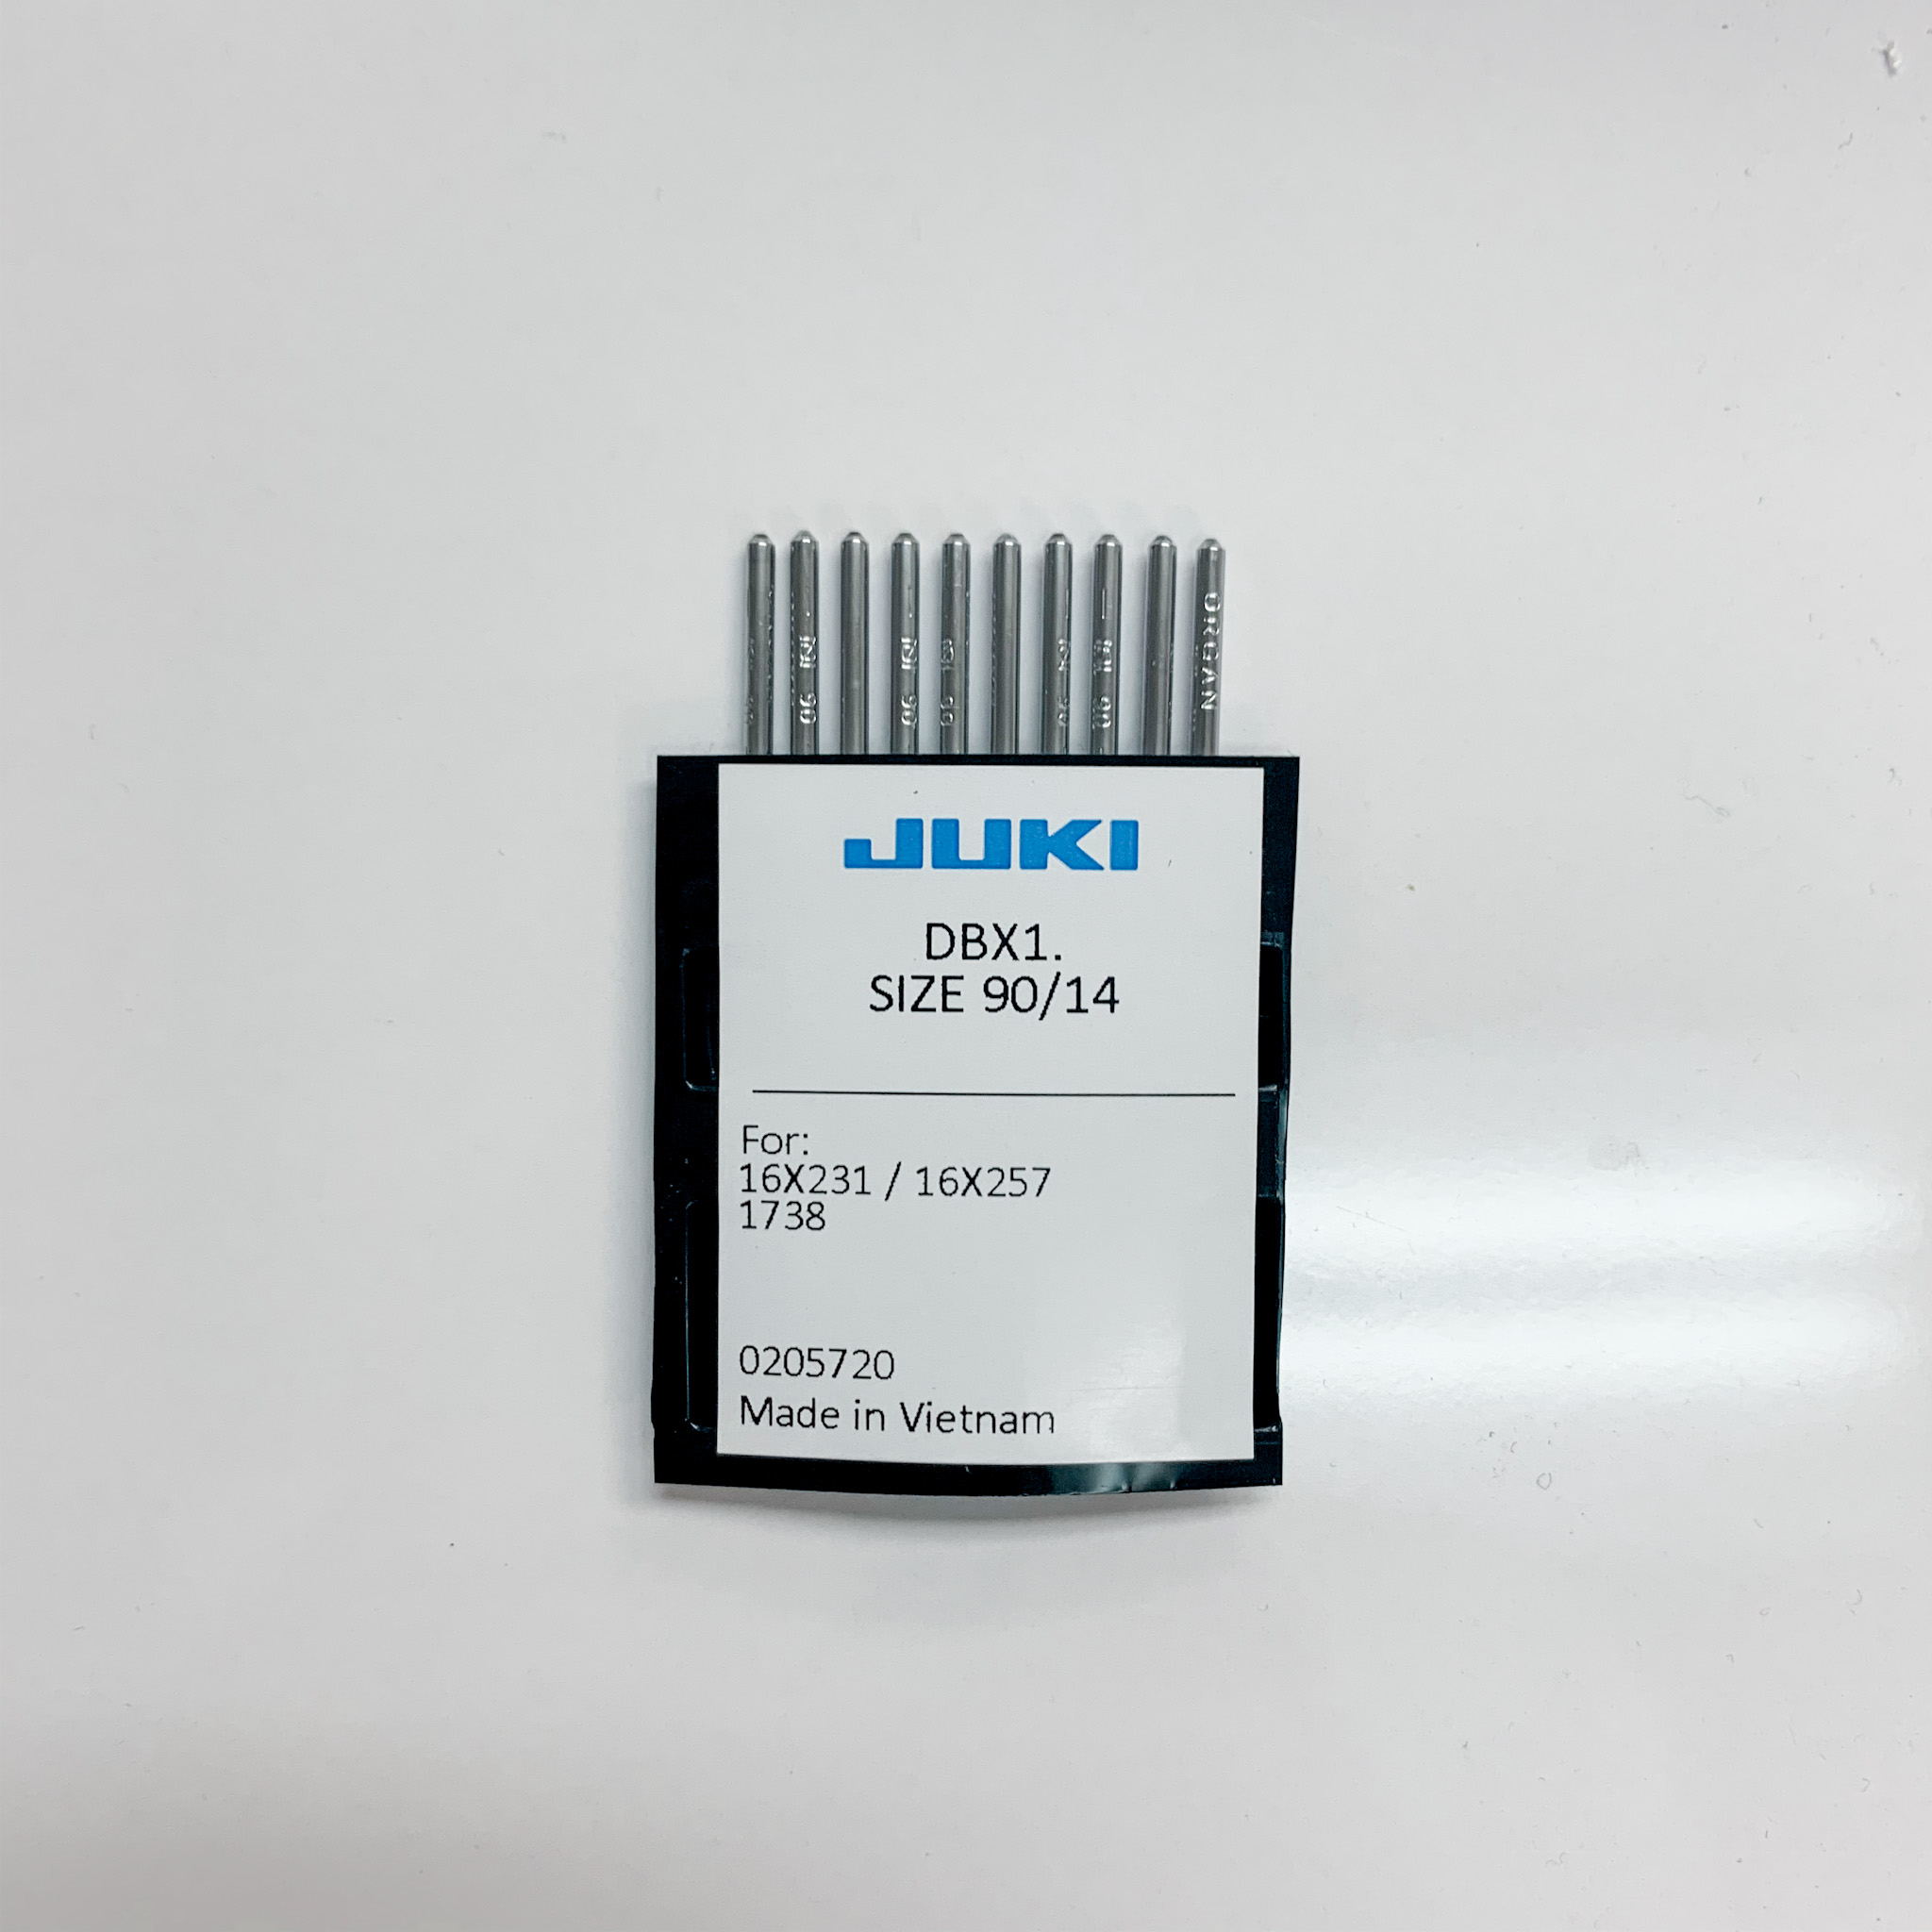 Juki Multi-Needle Titanium Machine Needles DBxK5Z1PD (10 Pack) - 1000's of  Parts - Pocono Sew & Vac